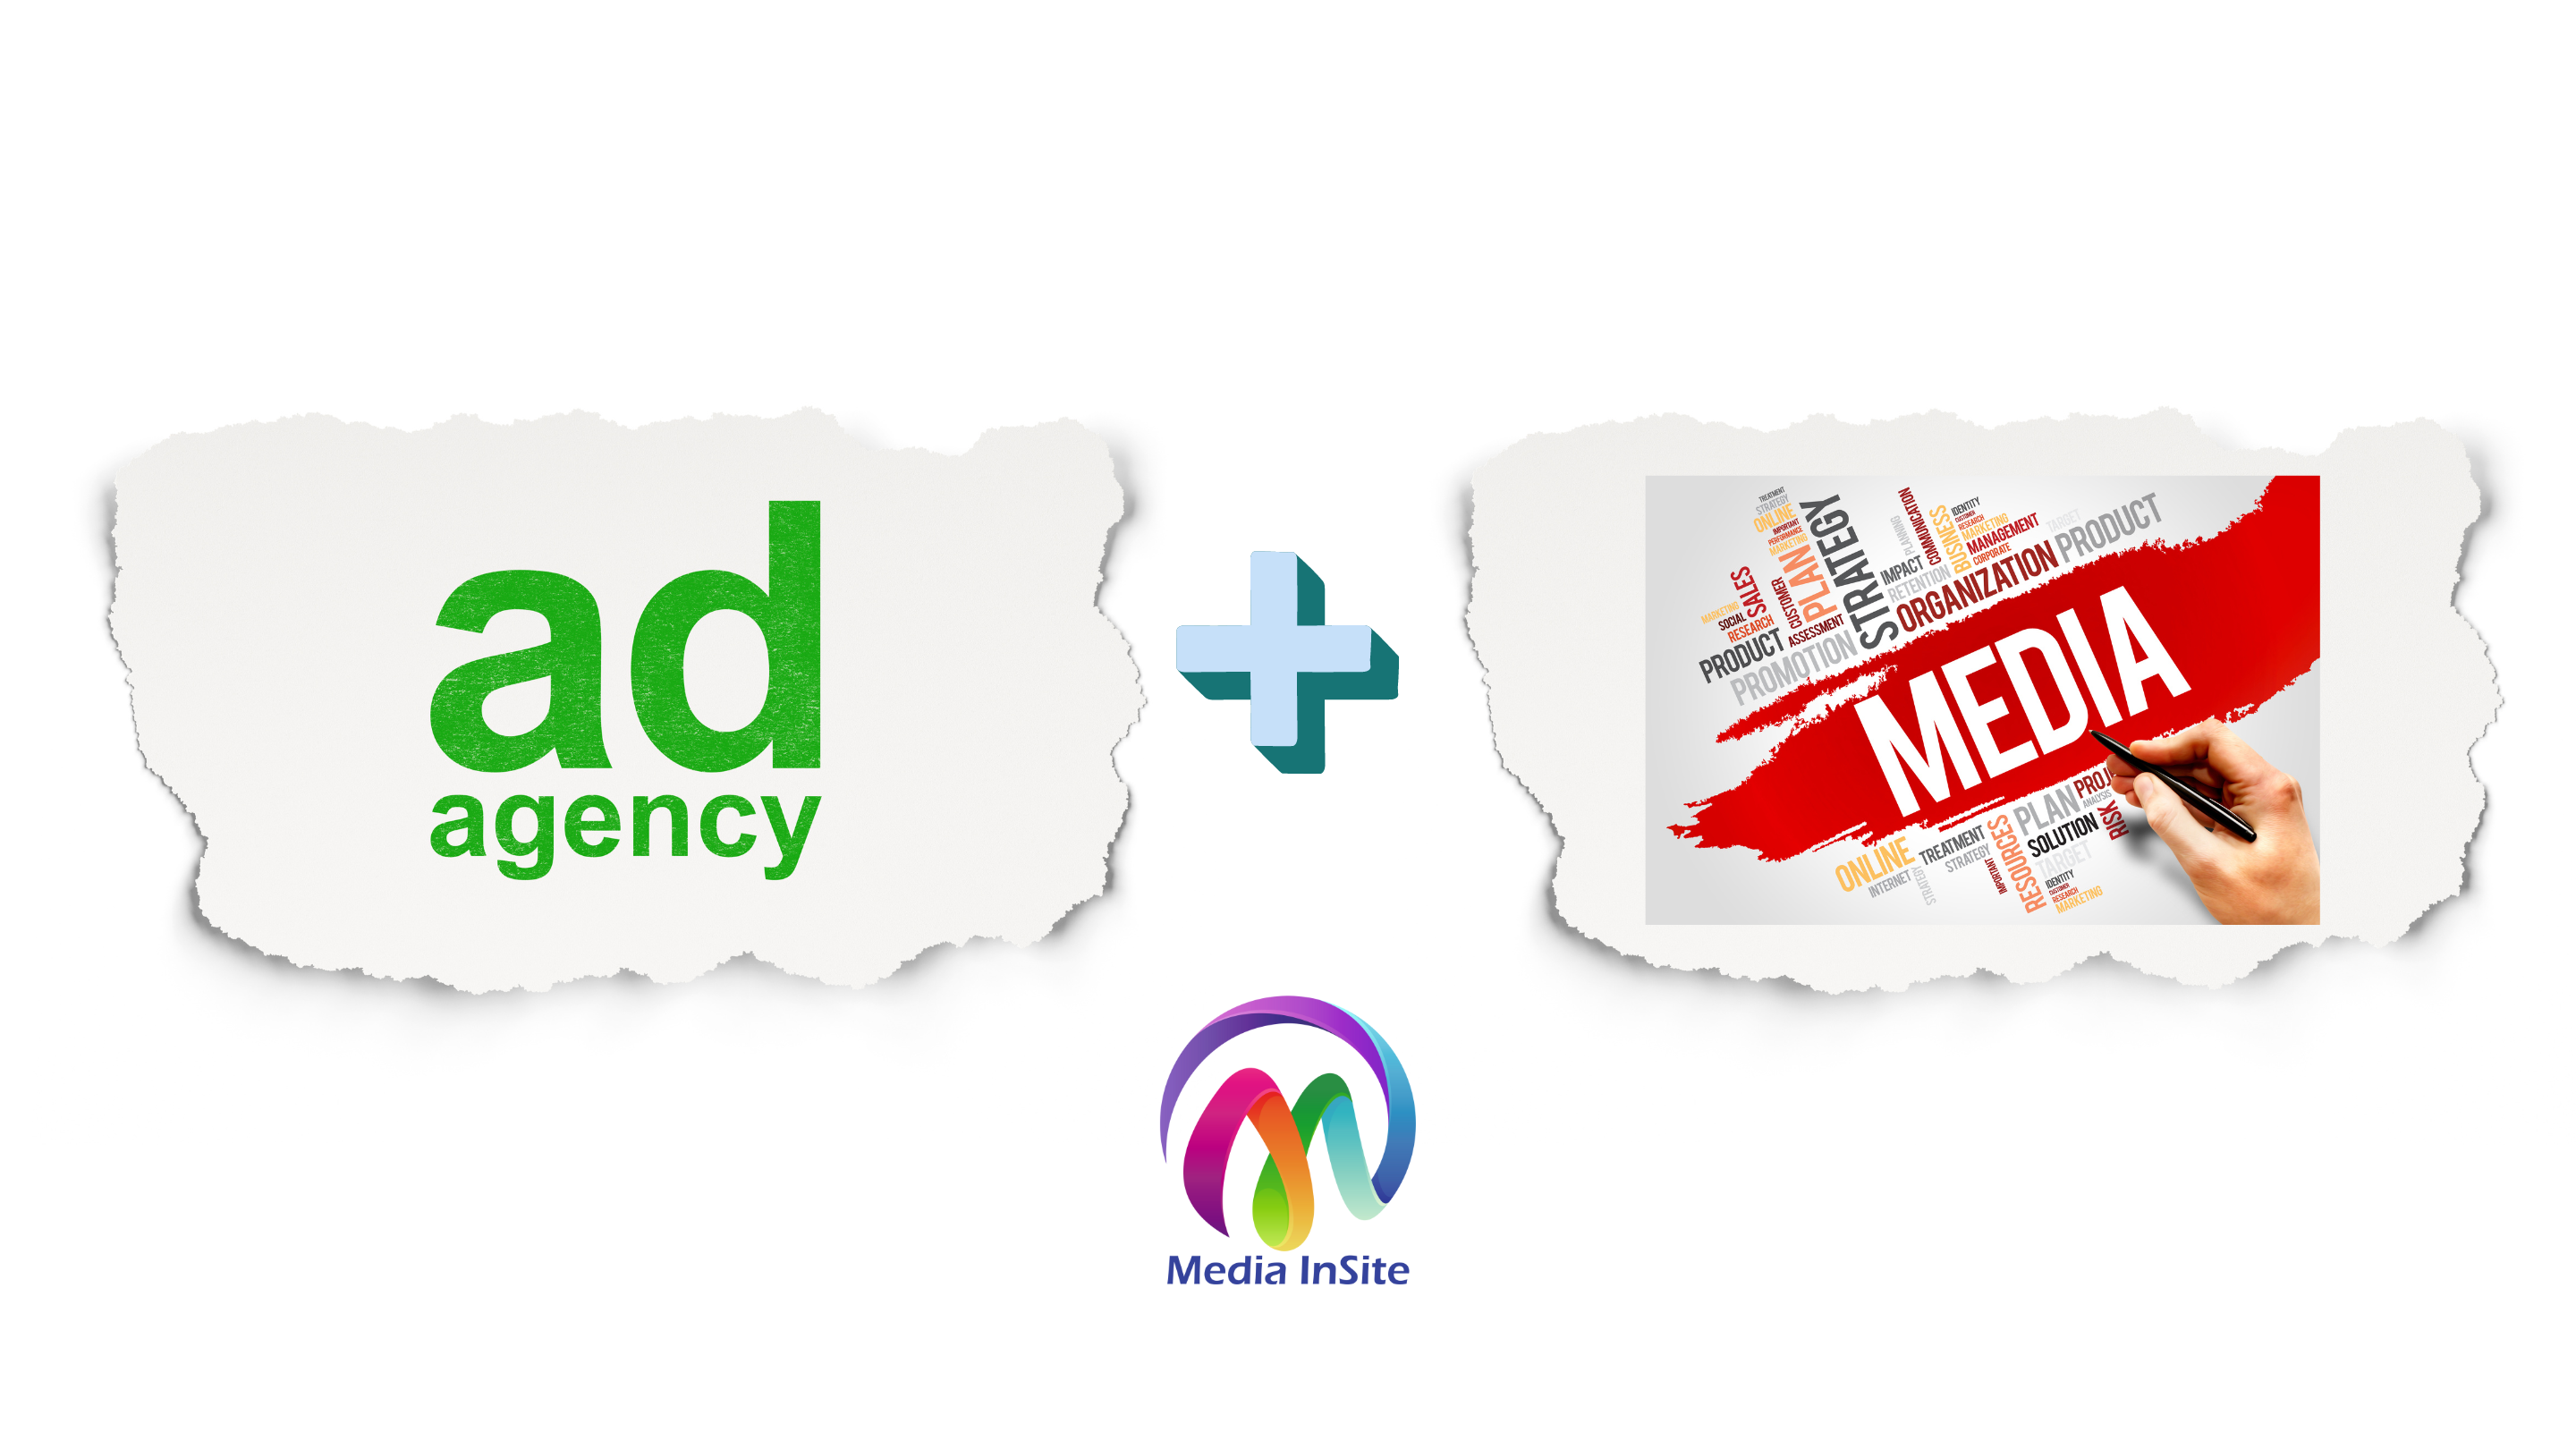 ad and media agencies